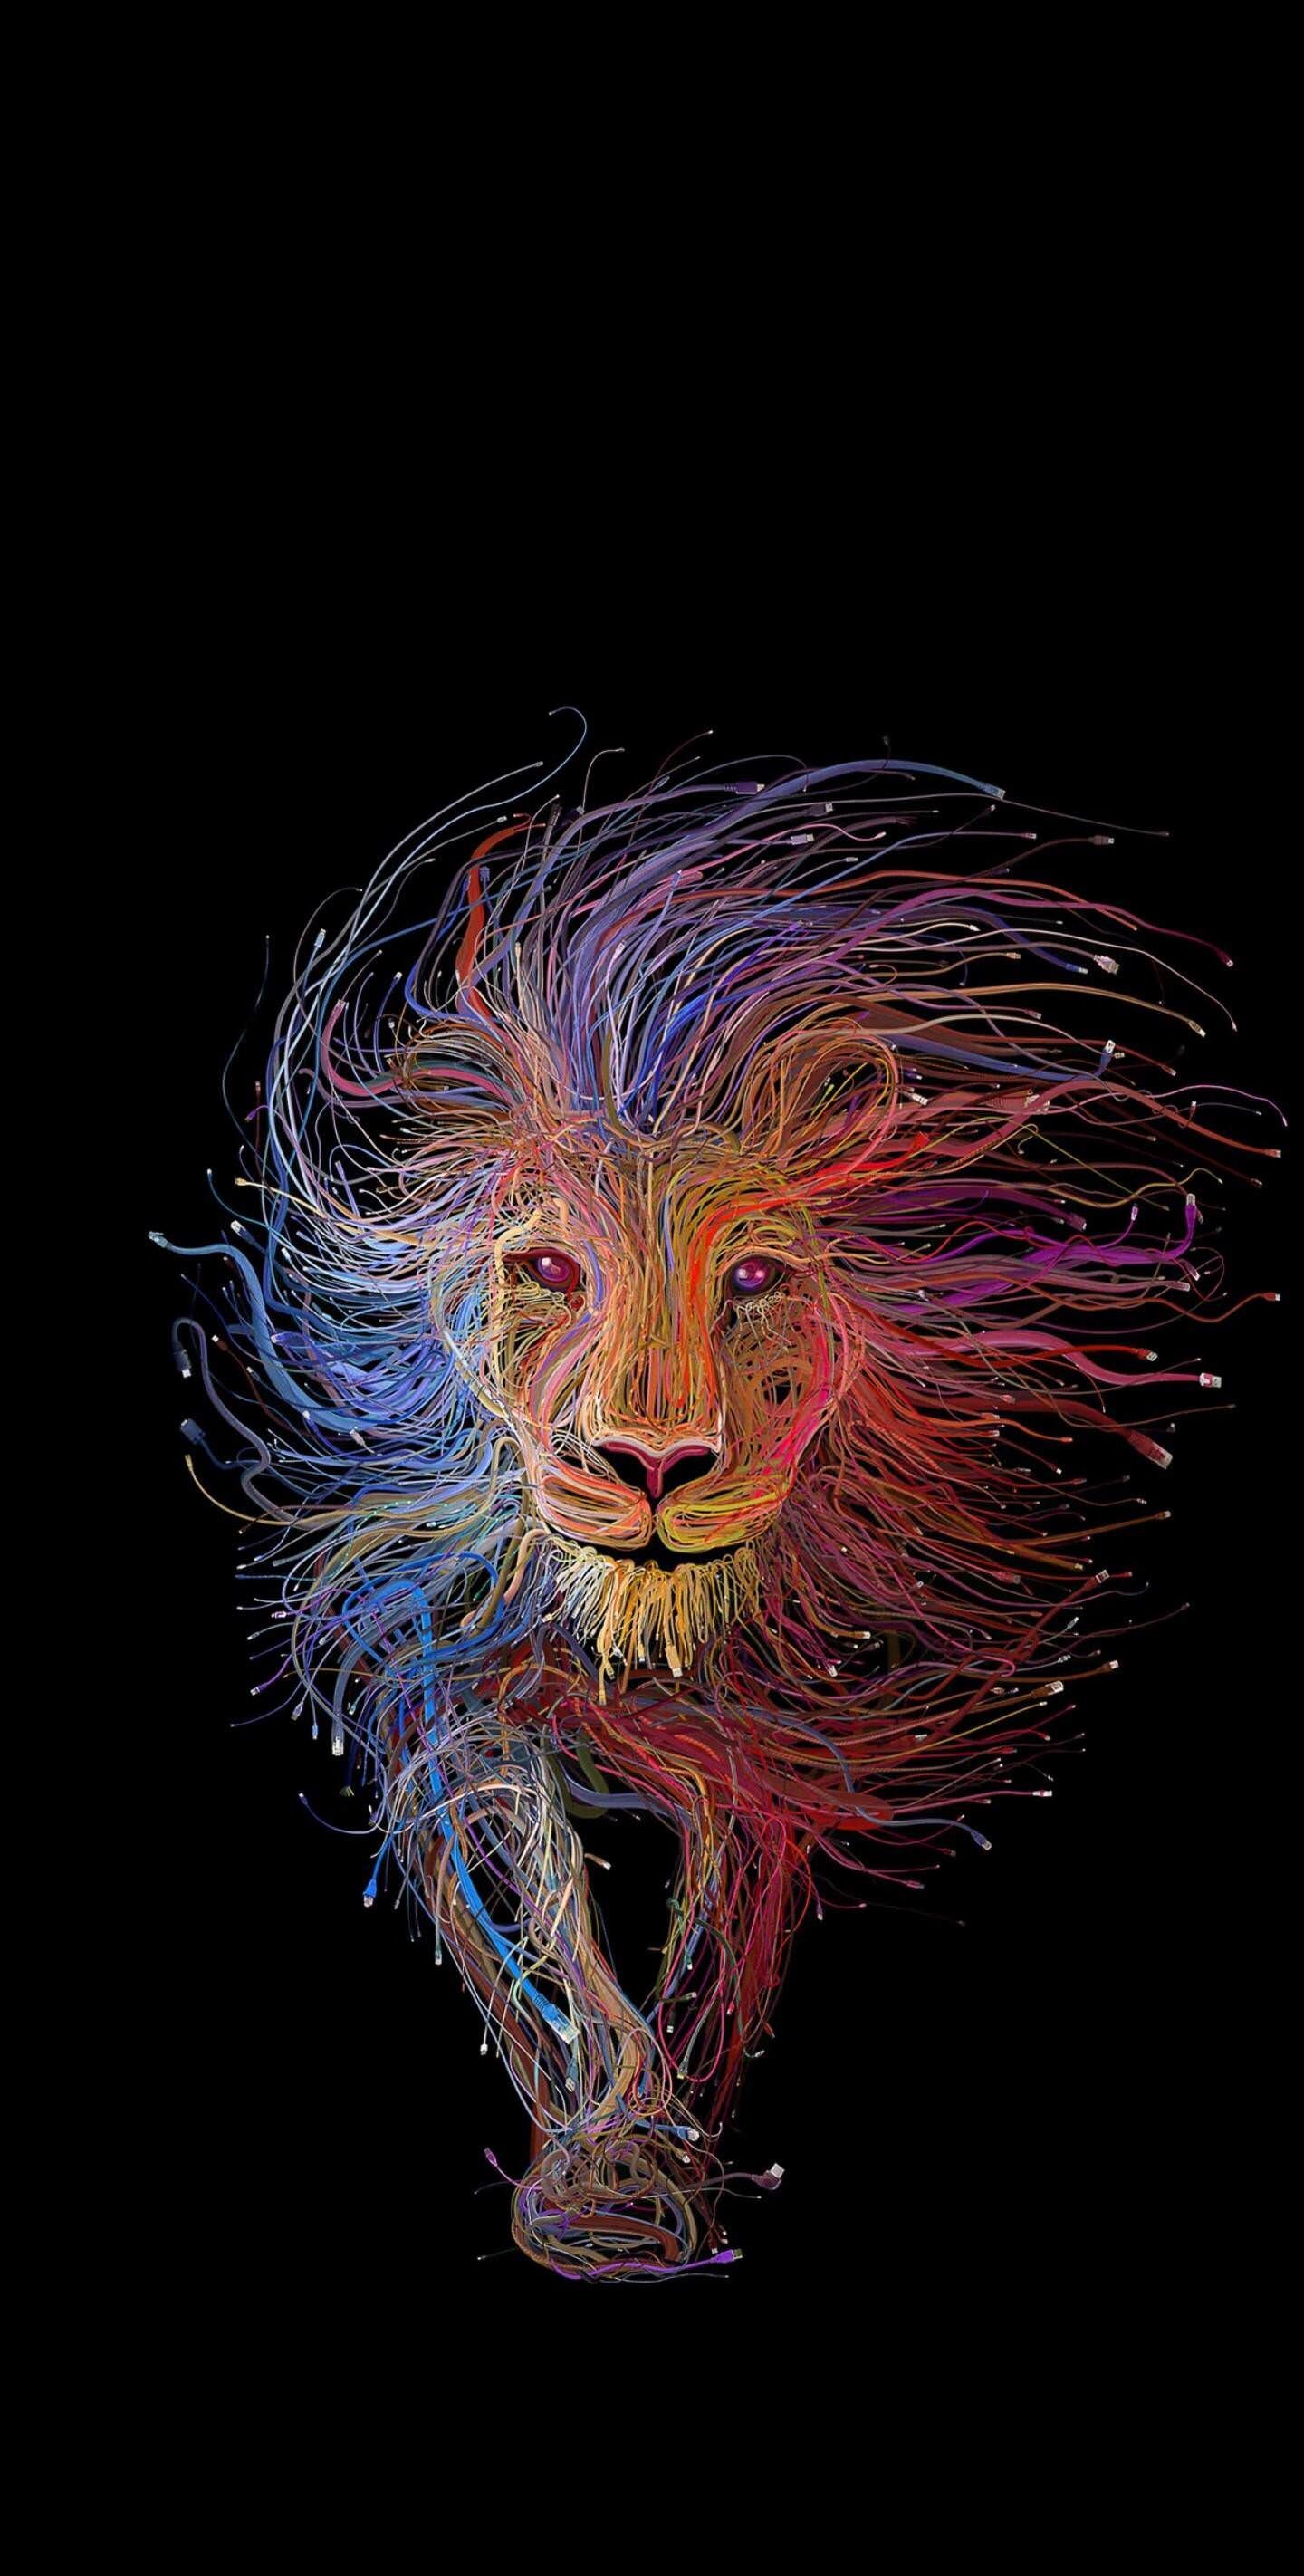 Amoled vivid lion. Animal print wallpaper, Lion wallpaper, Lion